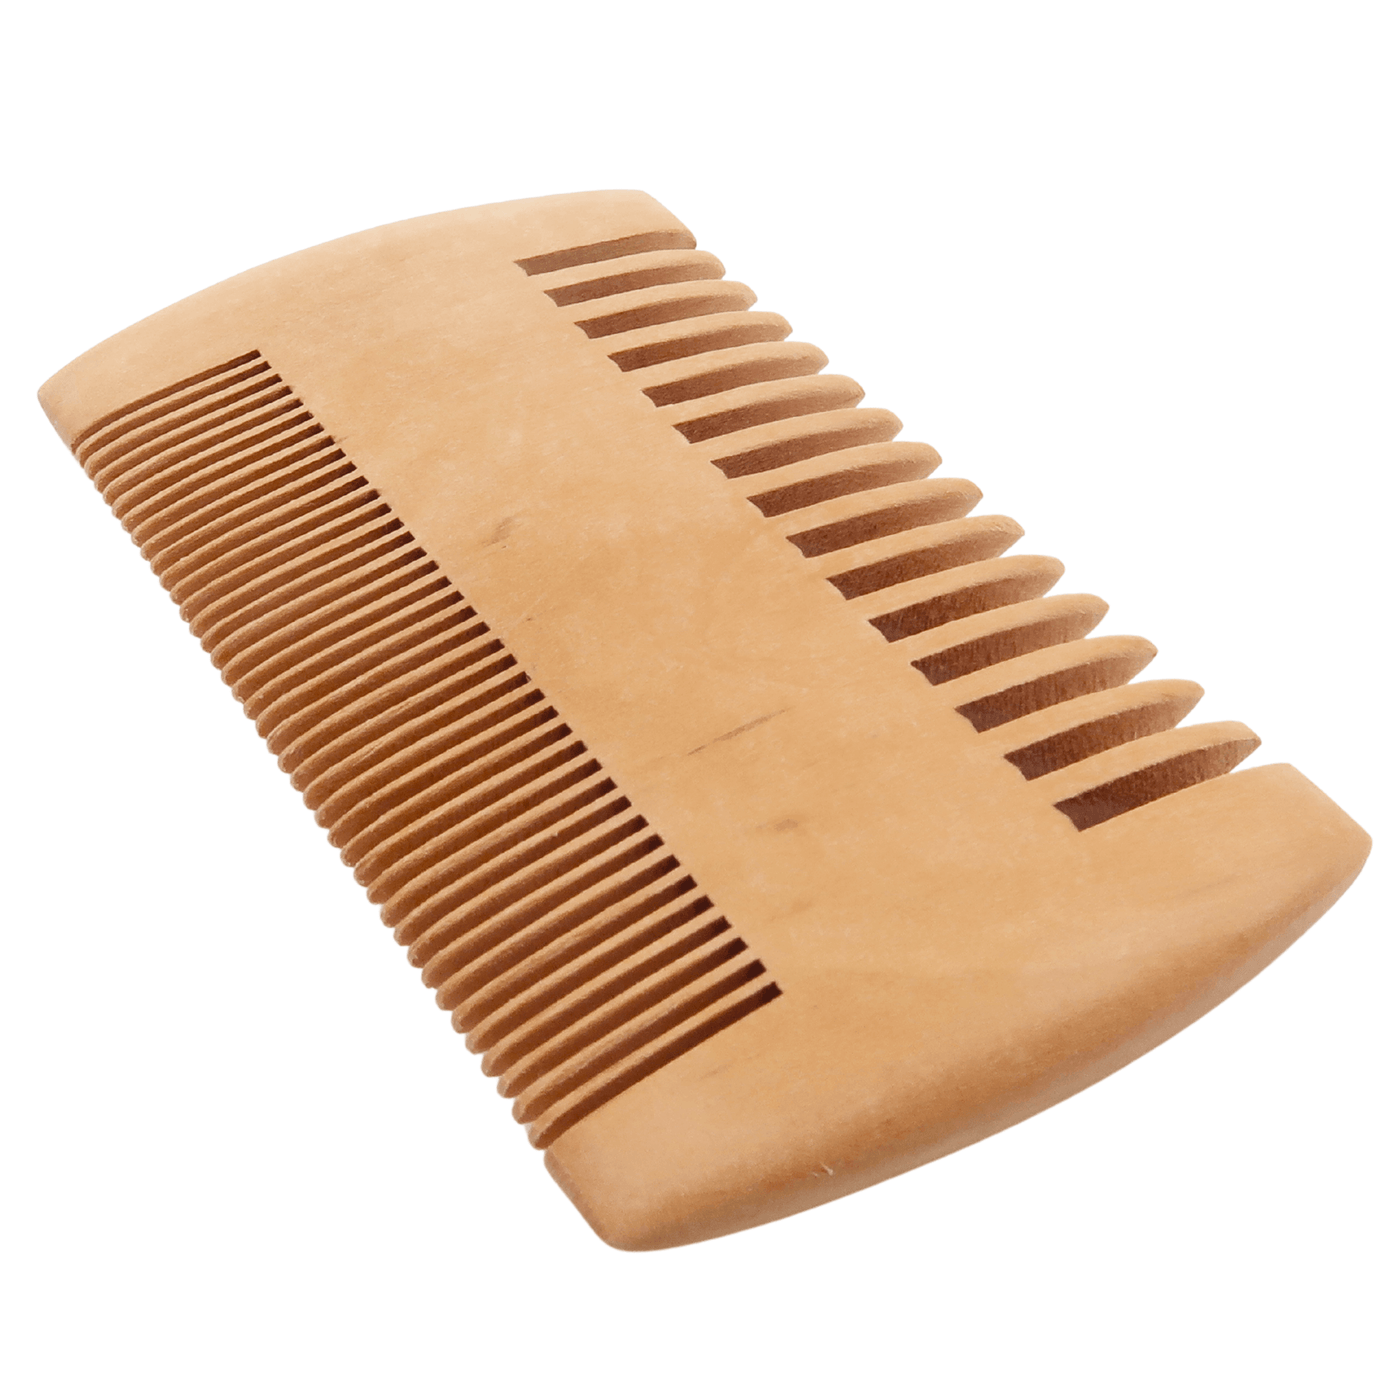 2 Sided Beard Comb - Luxury Pear Wood